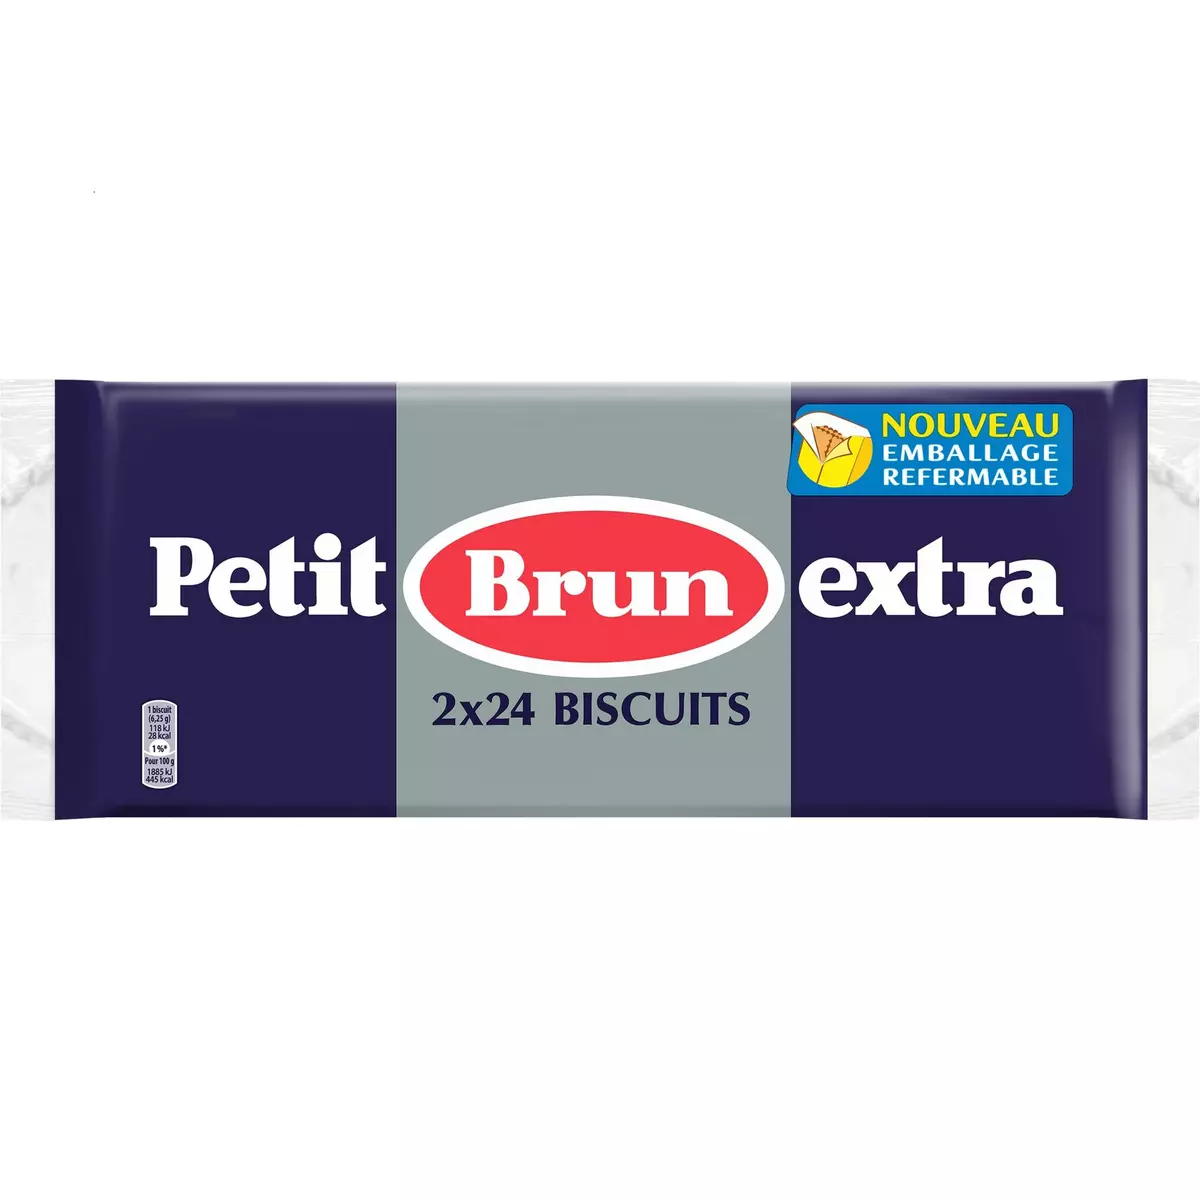 LU Petit Brun Extra biscuits sachets fraîcheur 2x24 biscuits 300g